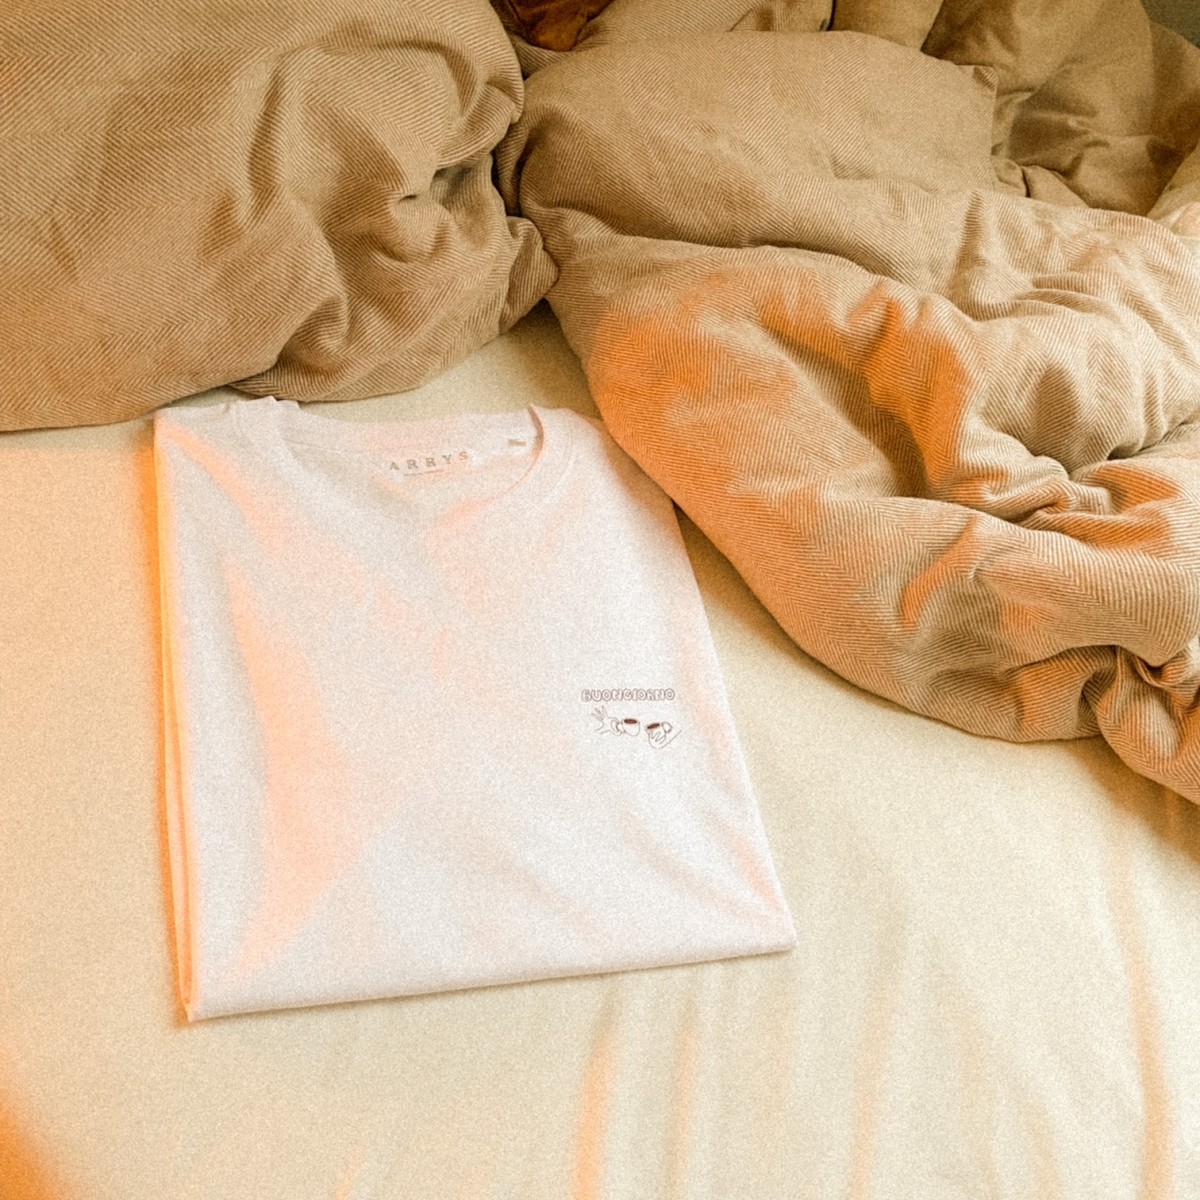 Larrys Fashion - buongiorno Shirt - weiß